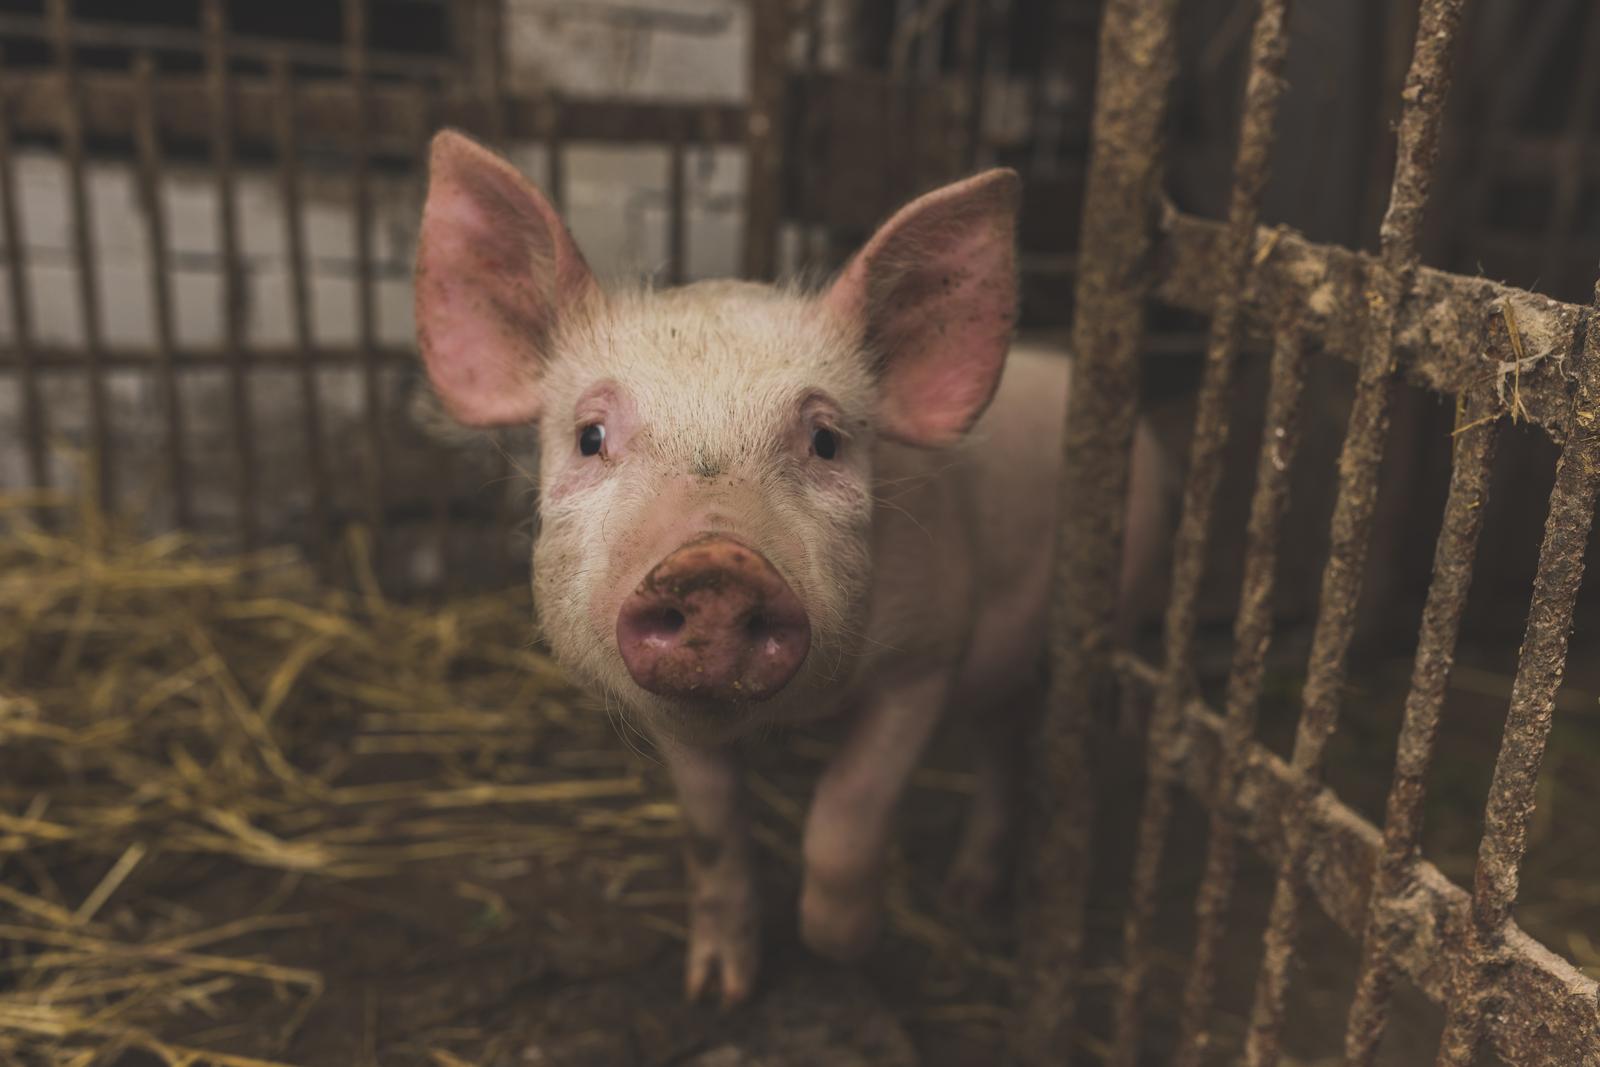 SCANFARM AS - Raising of swine/pigs in Estonia